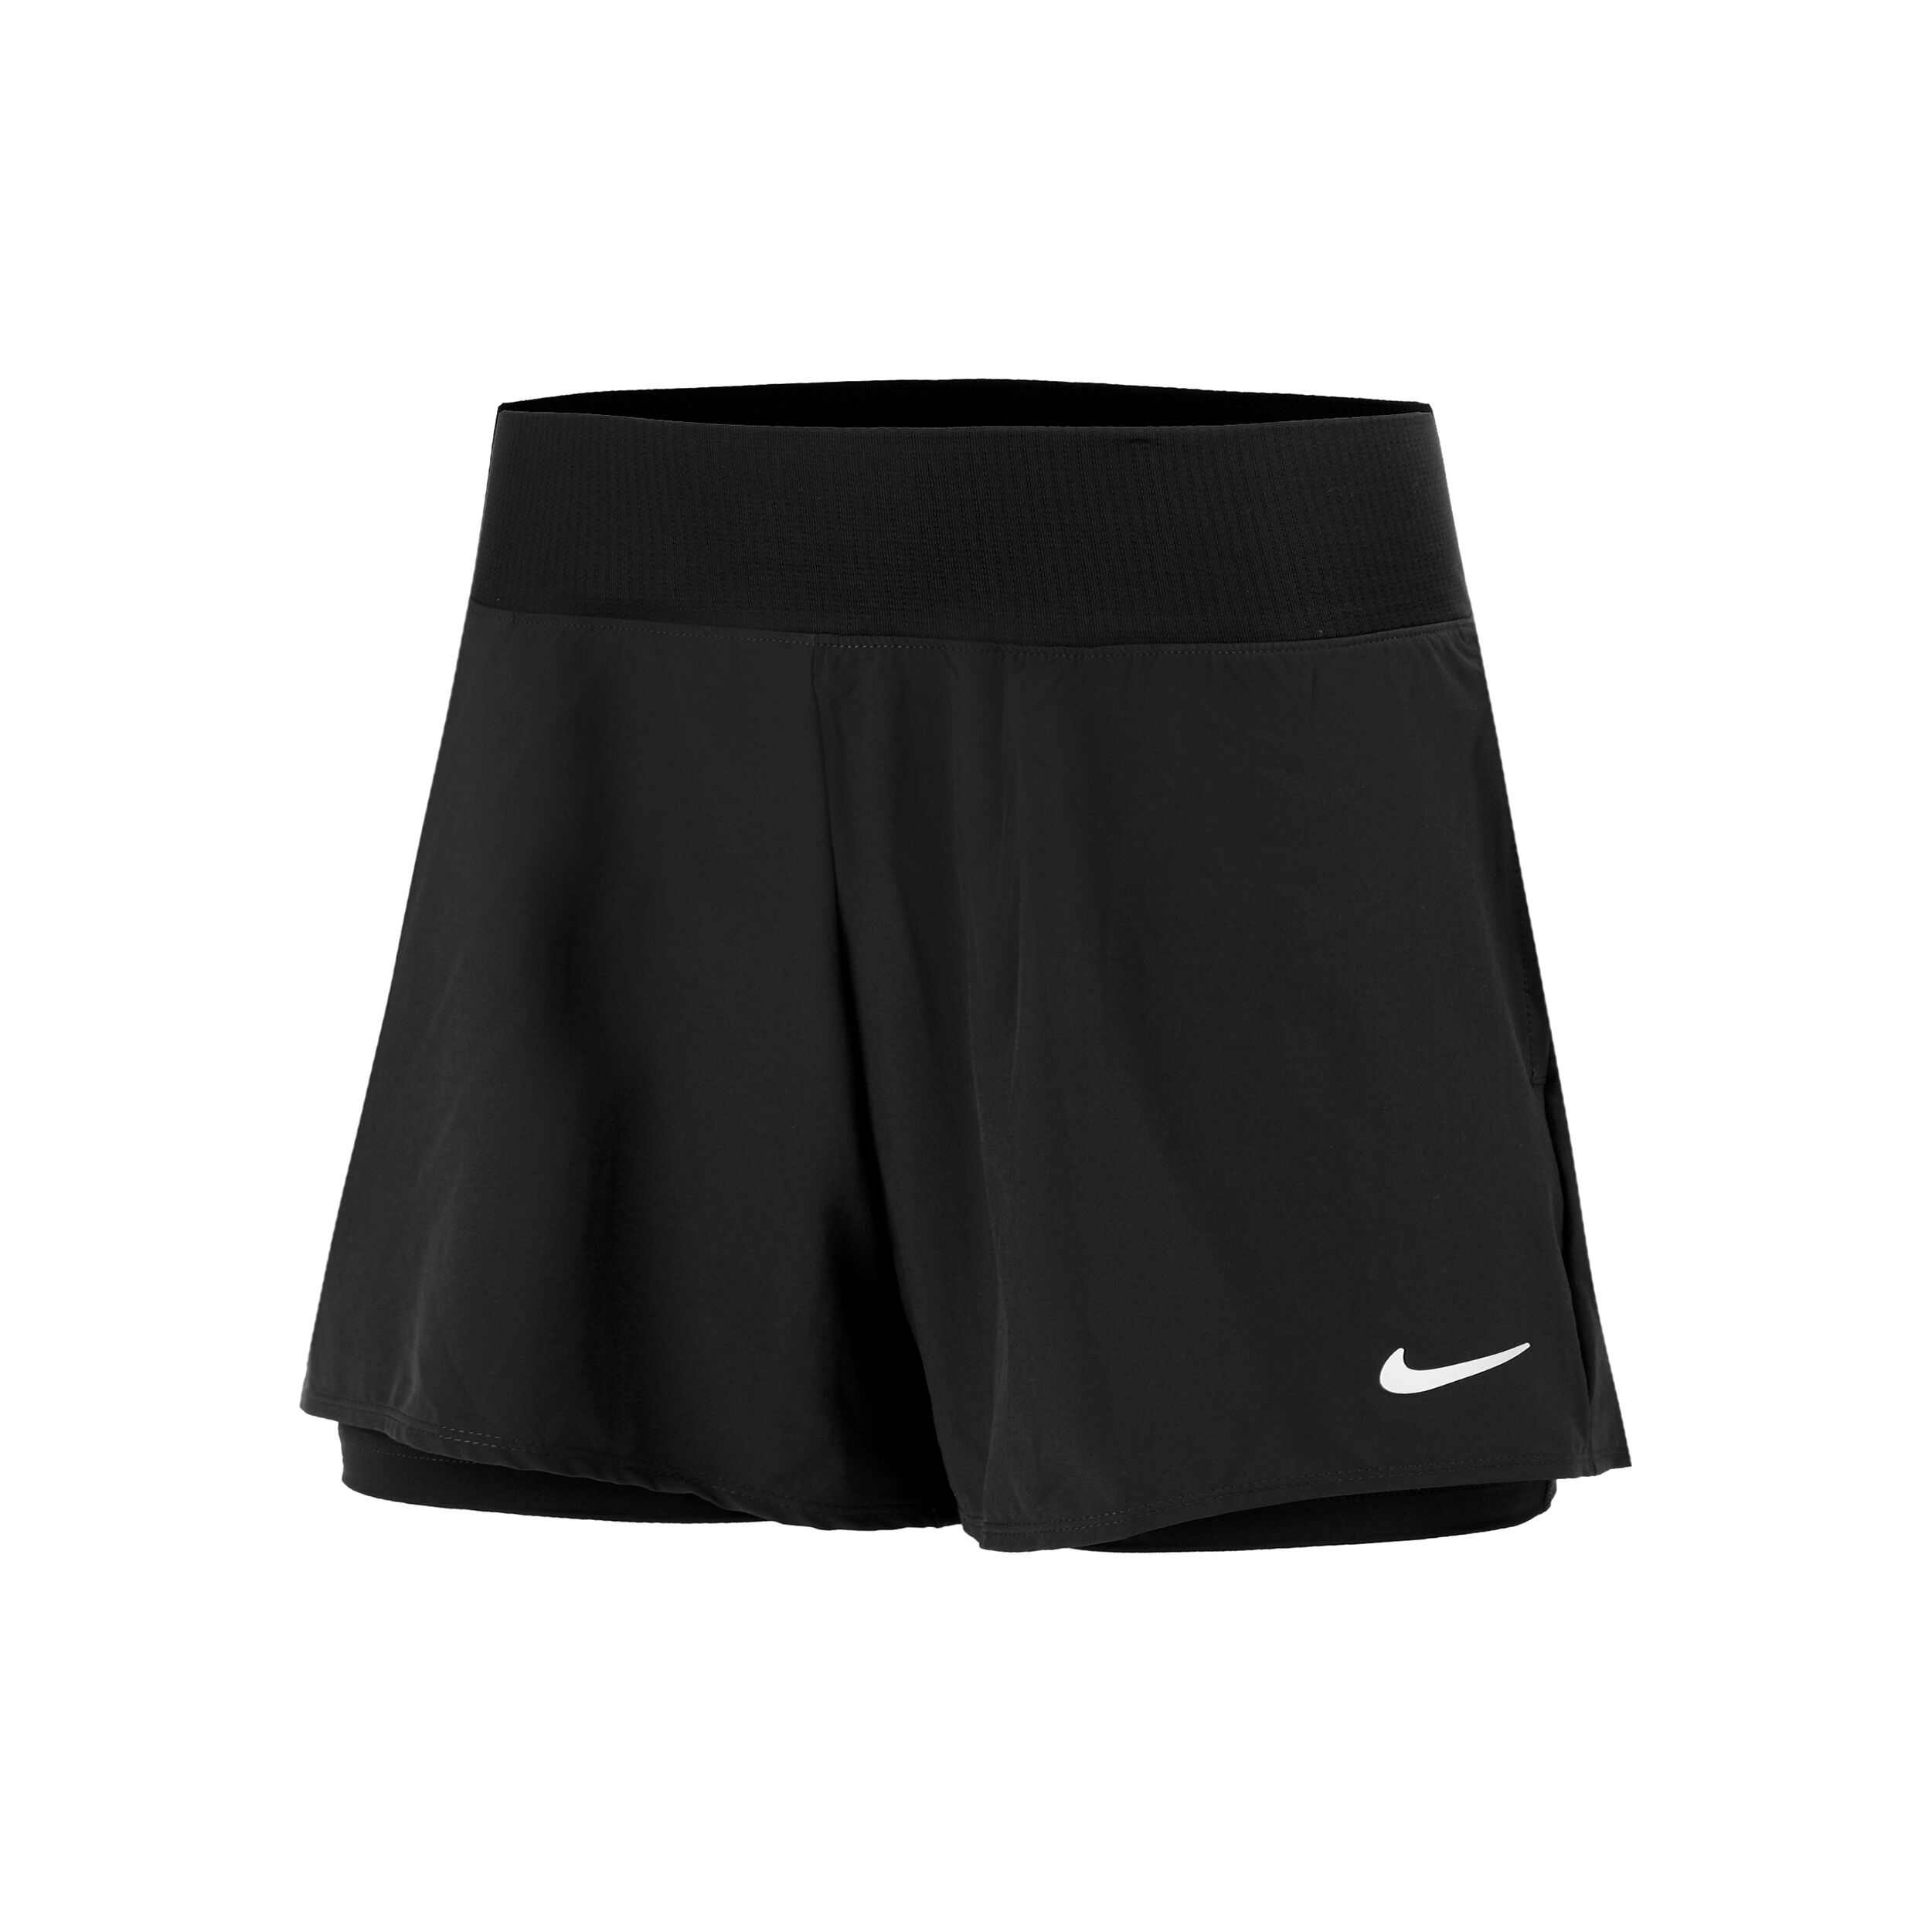 tennis shorts for women